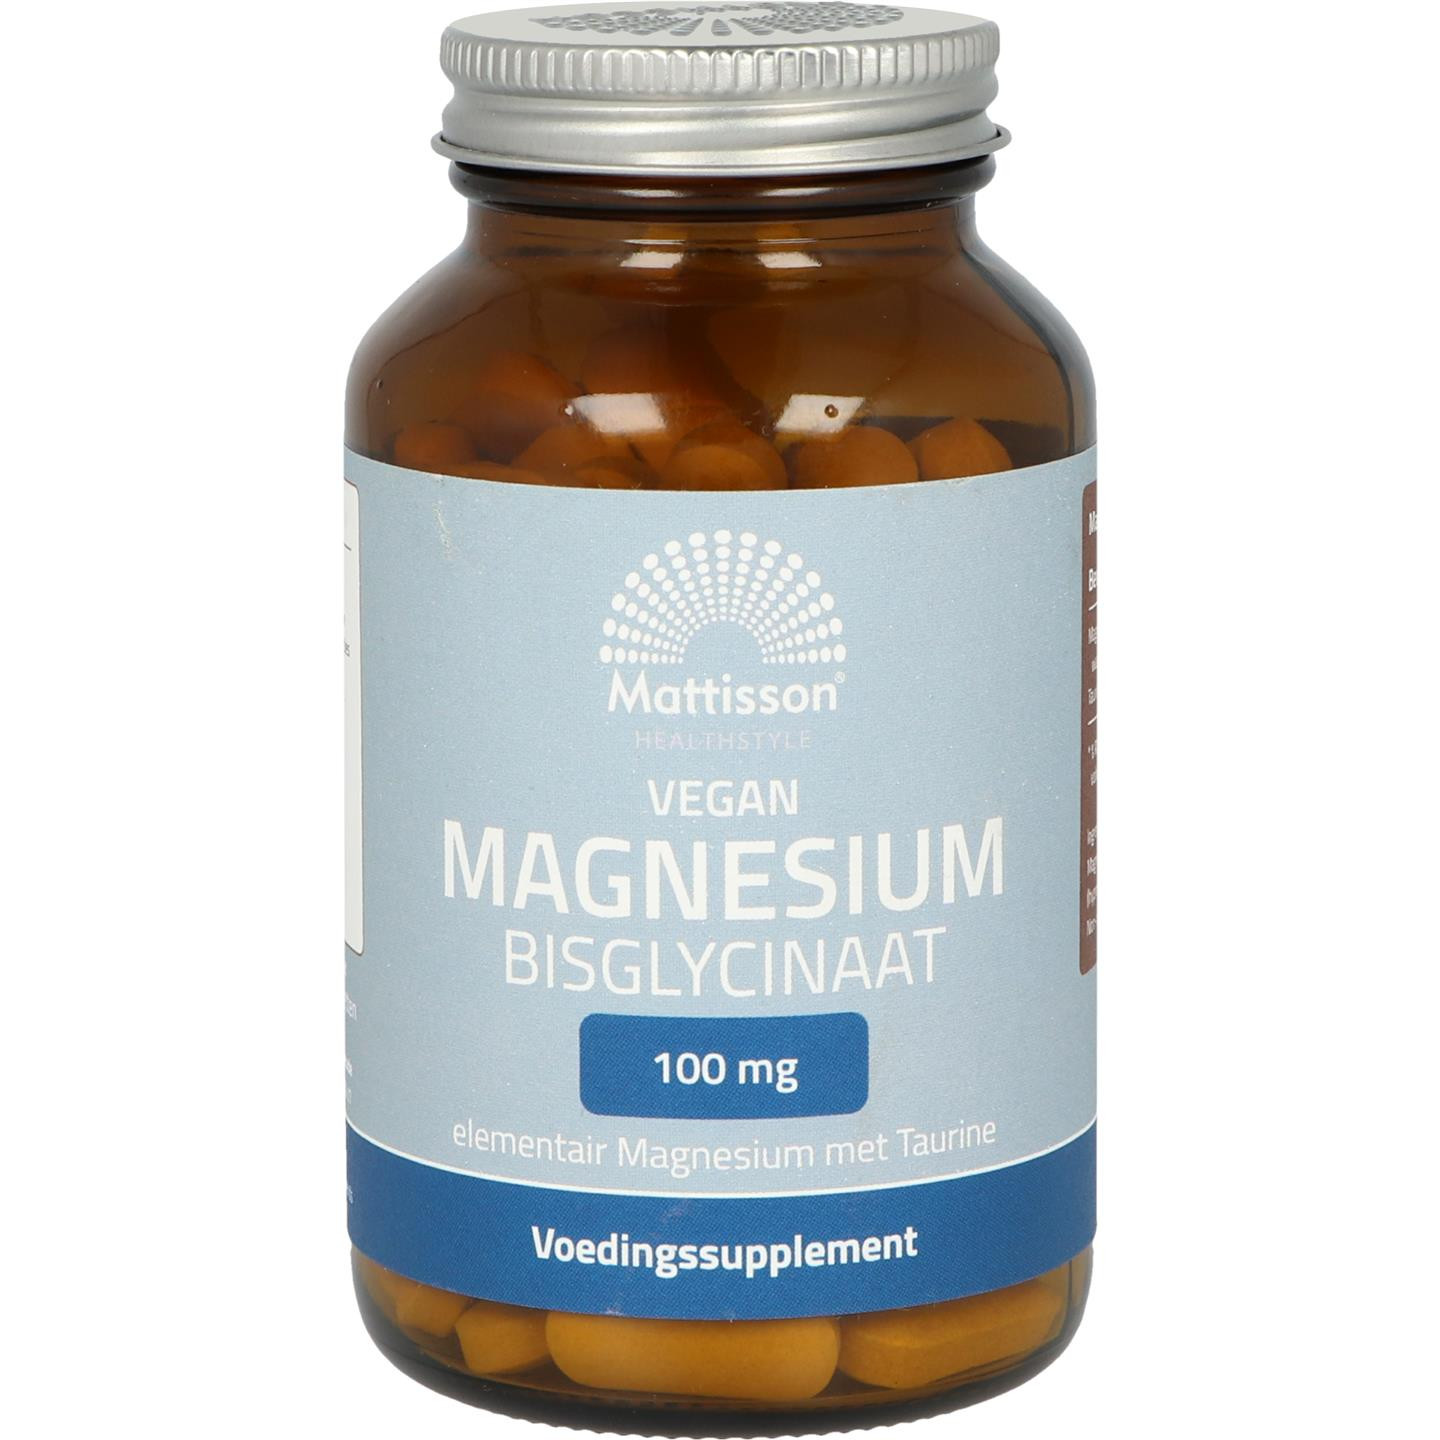 Vegan Magnesium Bisglycinaat